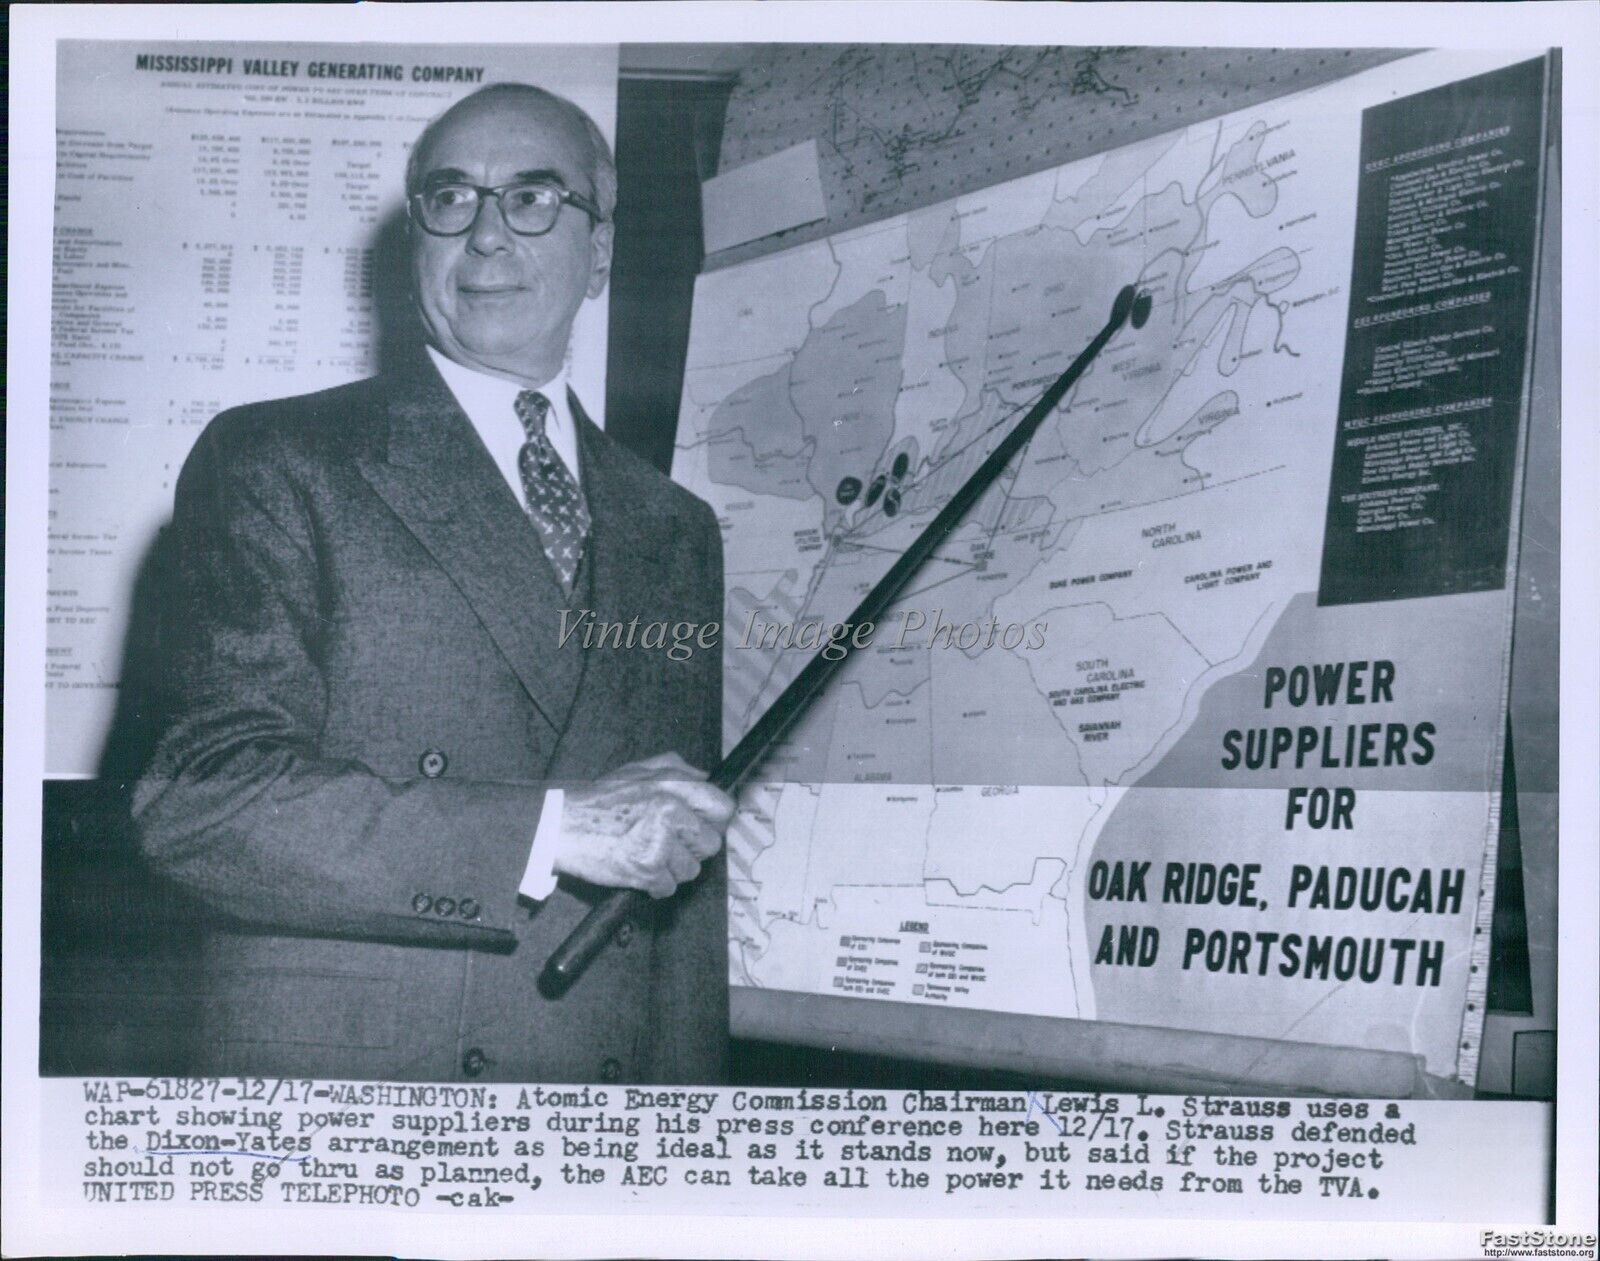 1955 Lewis Strauss A.E.C Chair Defends Dixon-Yates Plant Politics Wirephoto 7X9